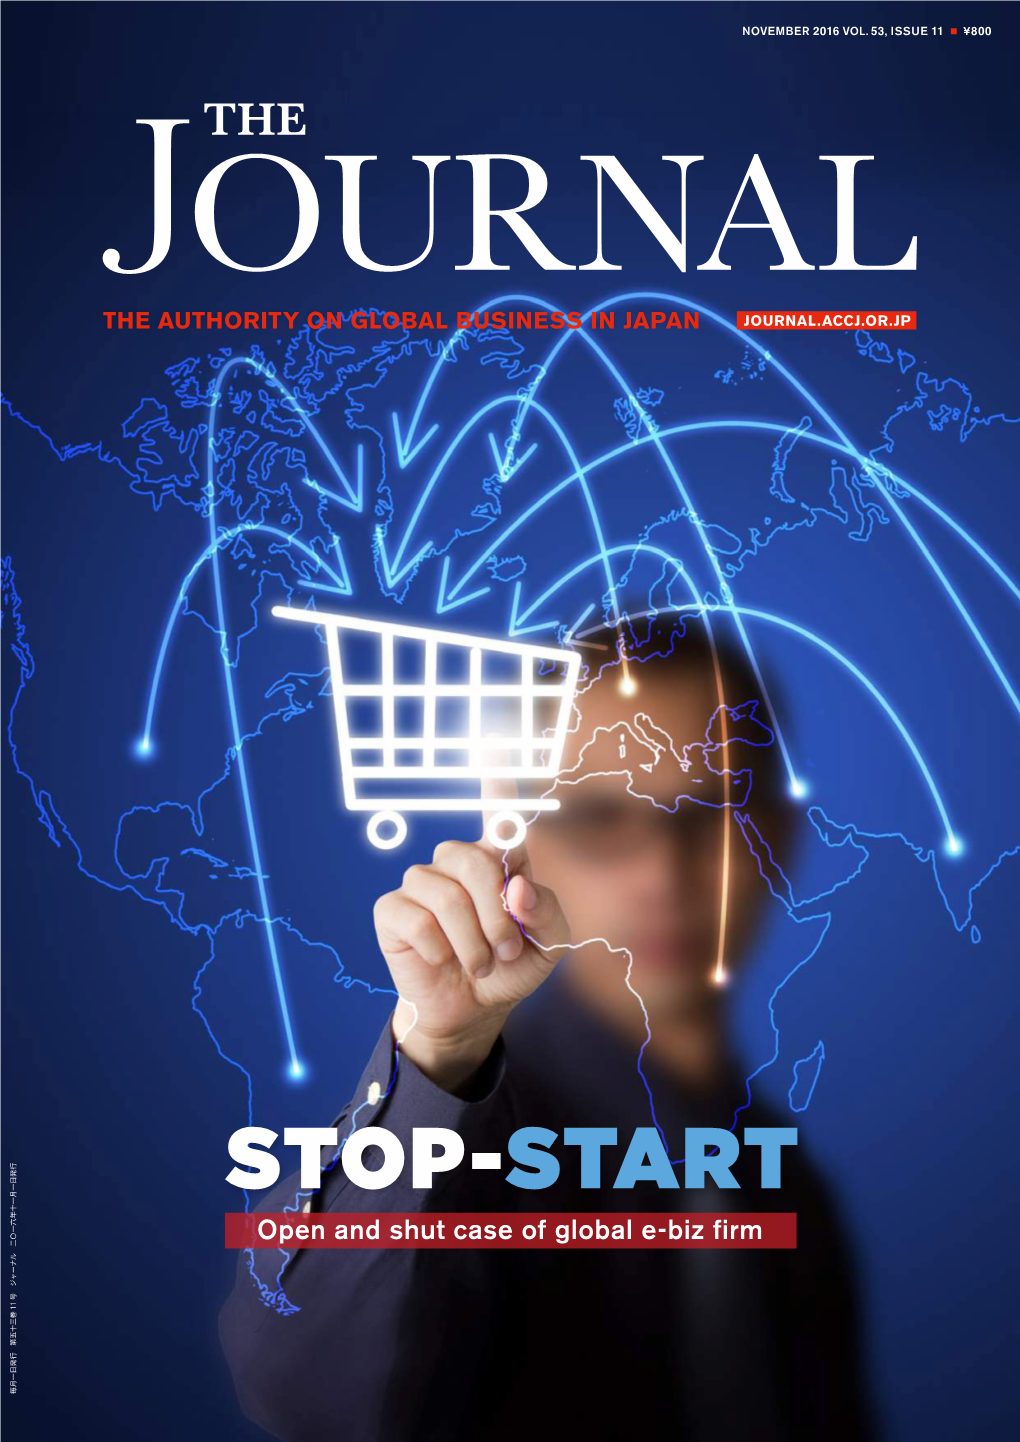 STOP-START Open and Shut Case of Global E-Biz Firm 毎月一日発行 第五十三巻 11 号 ジャーナル 二〇一六年十一月一日発行 WE NEGOTIATE